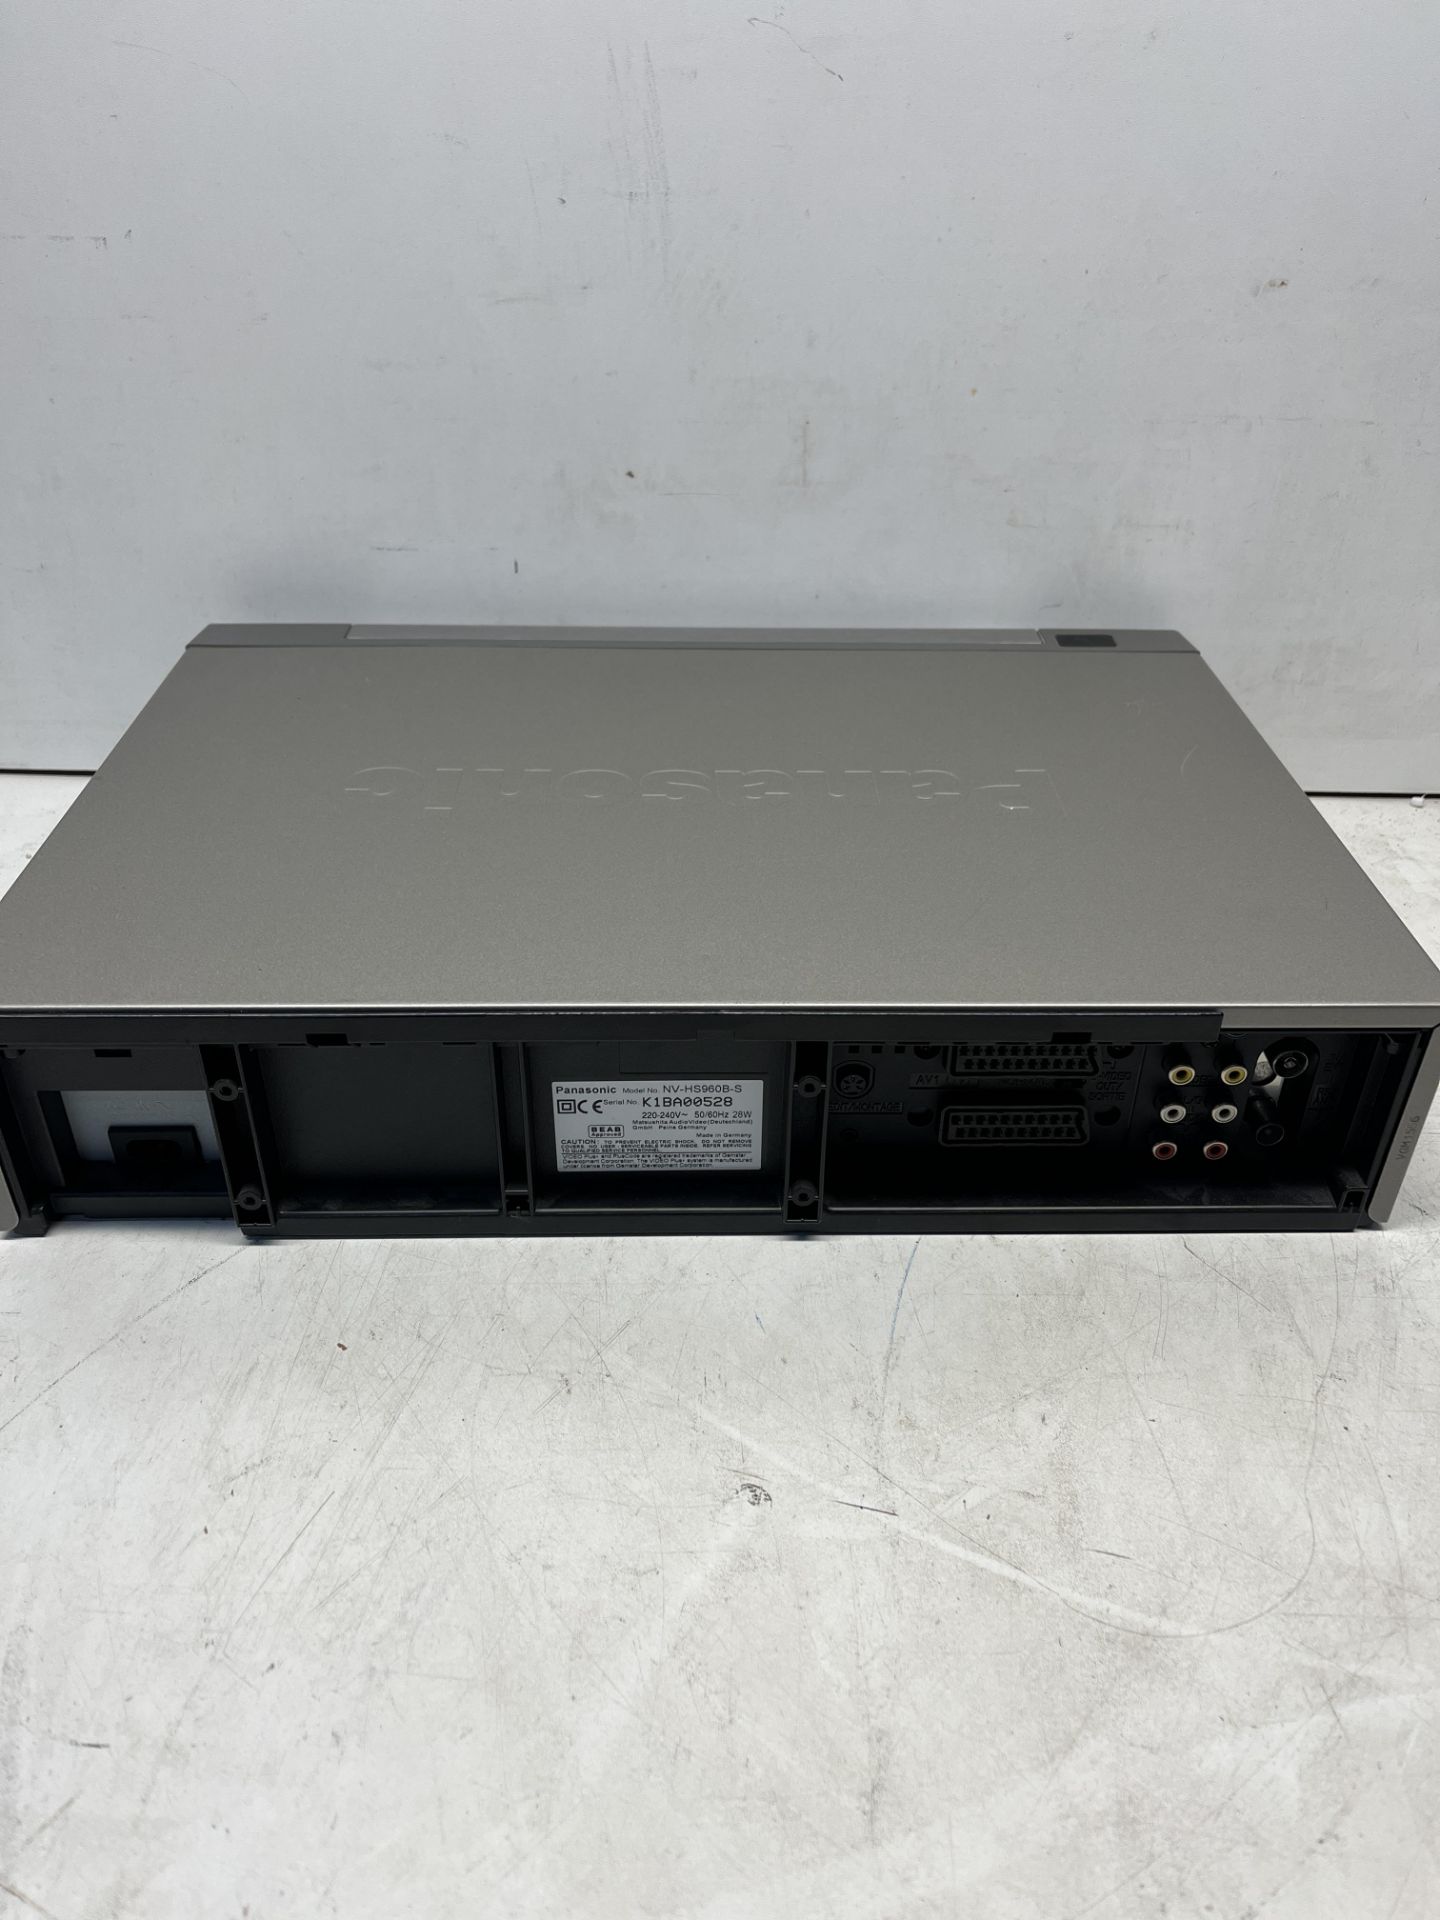 Panasonic NV-HS960 High-End Super VHS Video Player Super Drive - Image 4 of 5